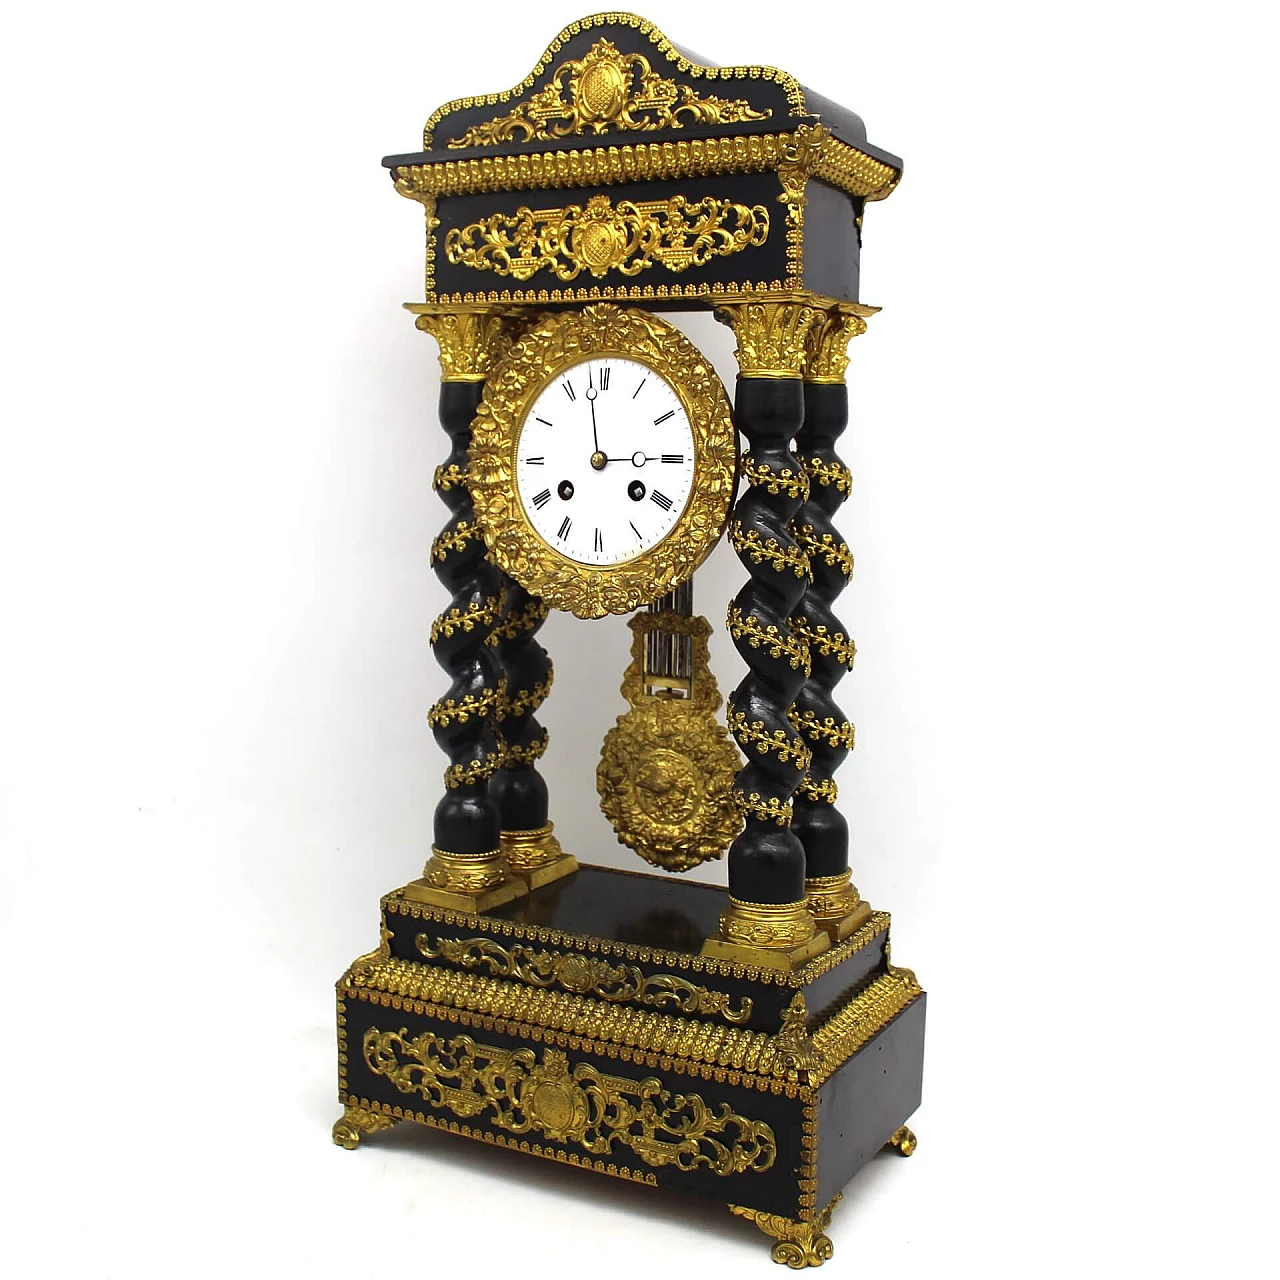 Napoleon III pendulum clock in ebonized wood and gilded bronzes, 19th century. 1336765